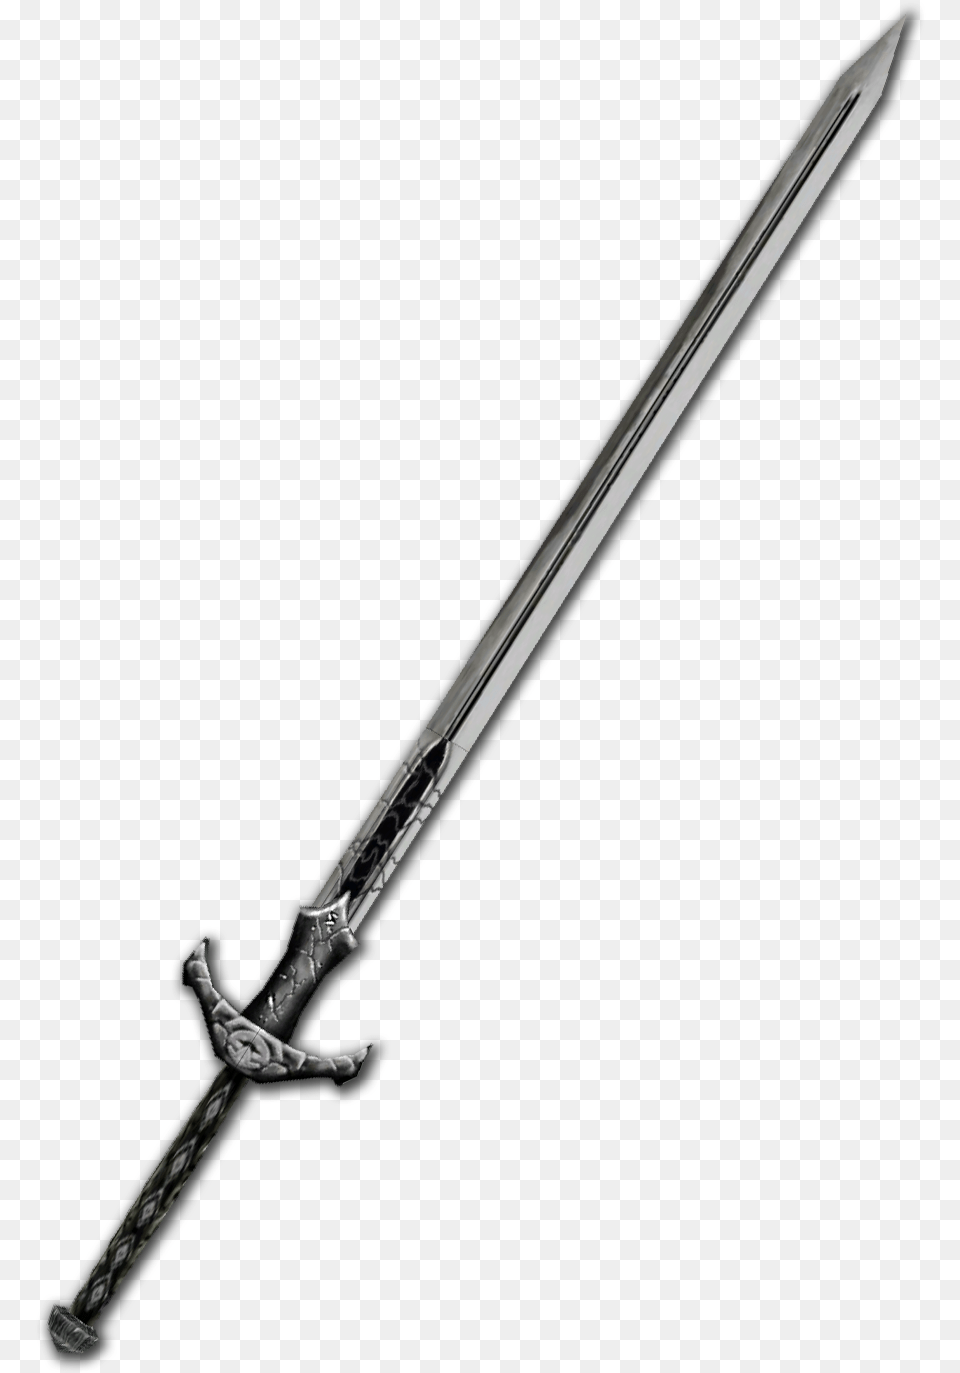 Download Of Swords Clipart Gun For Picsart, Sword, Weapon, Blade, Dagger Png